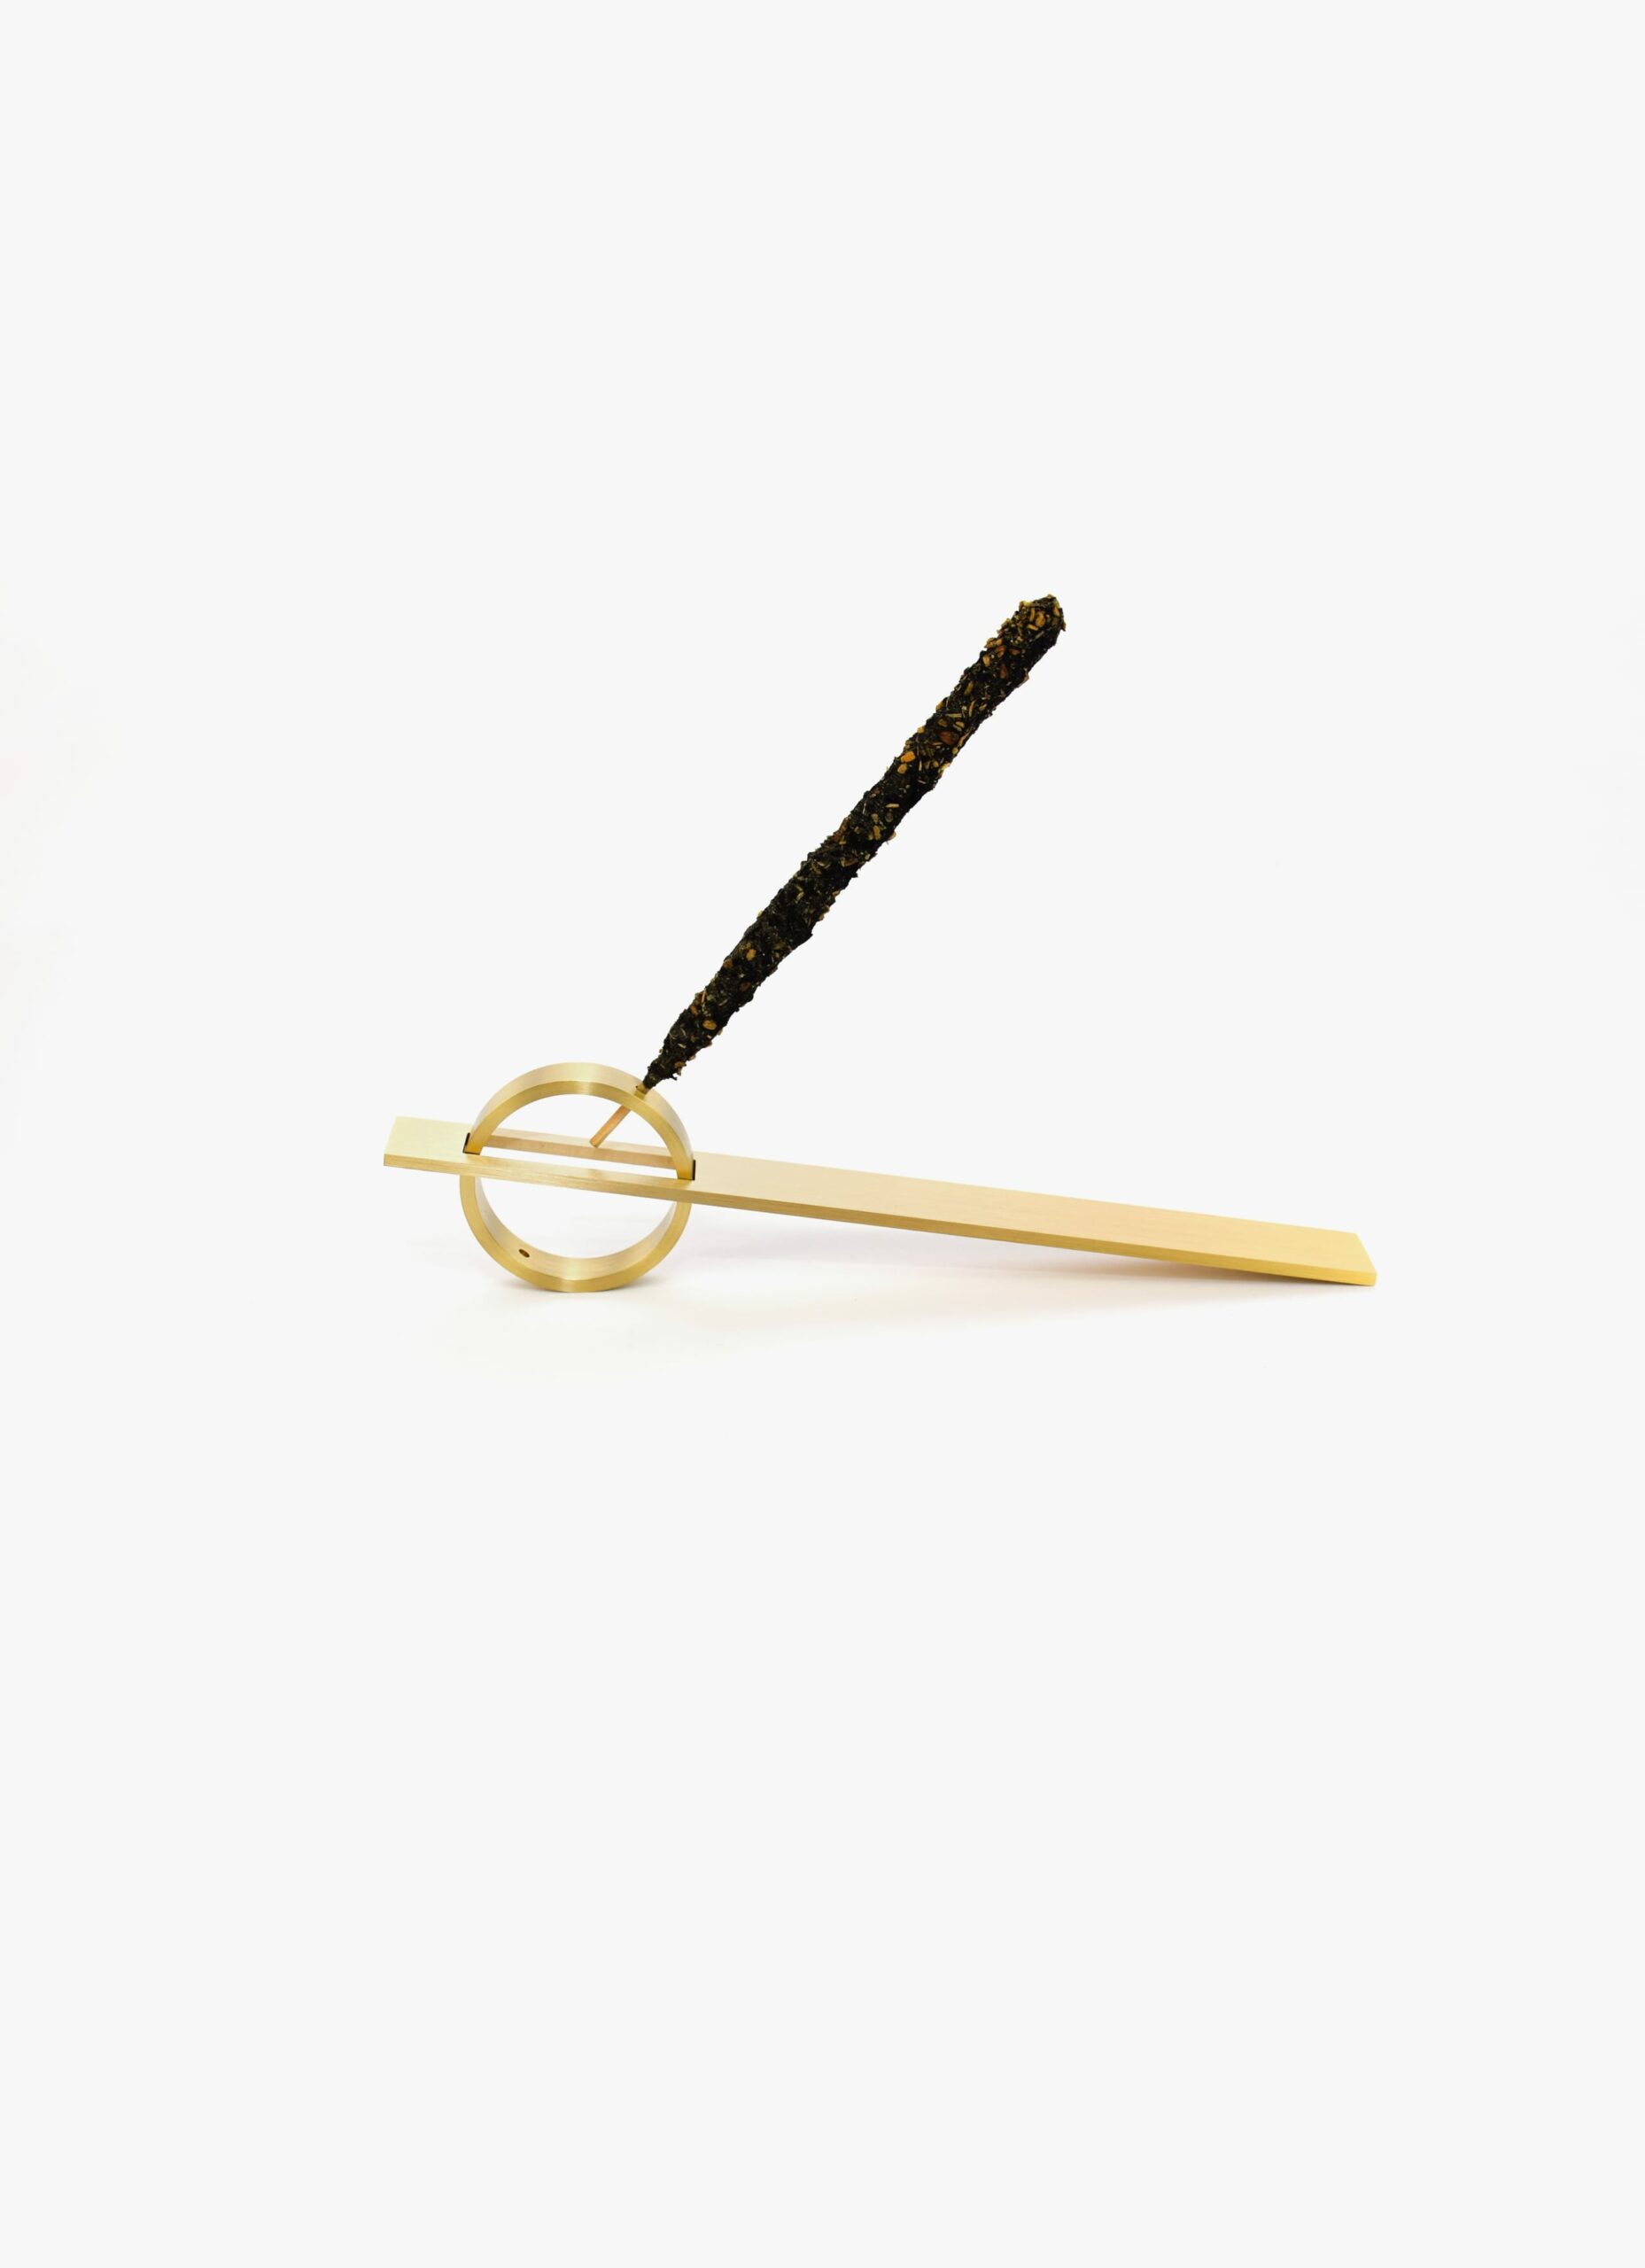 Incausa - Still - Incense holder - recycled brass